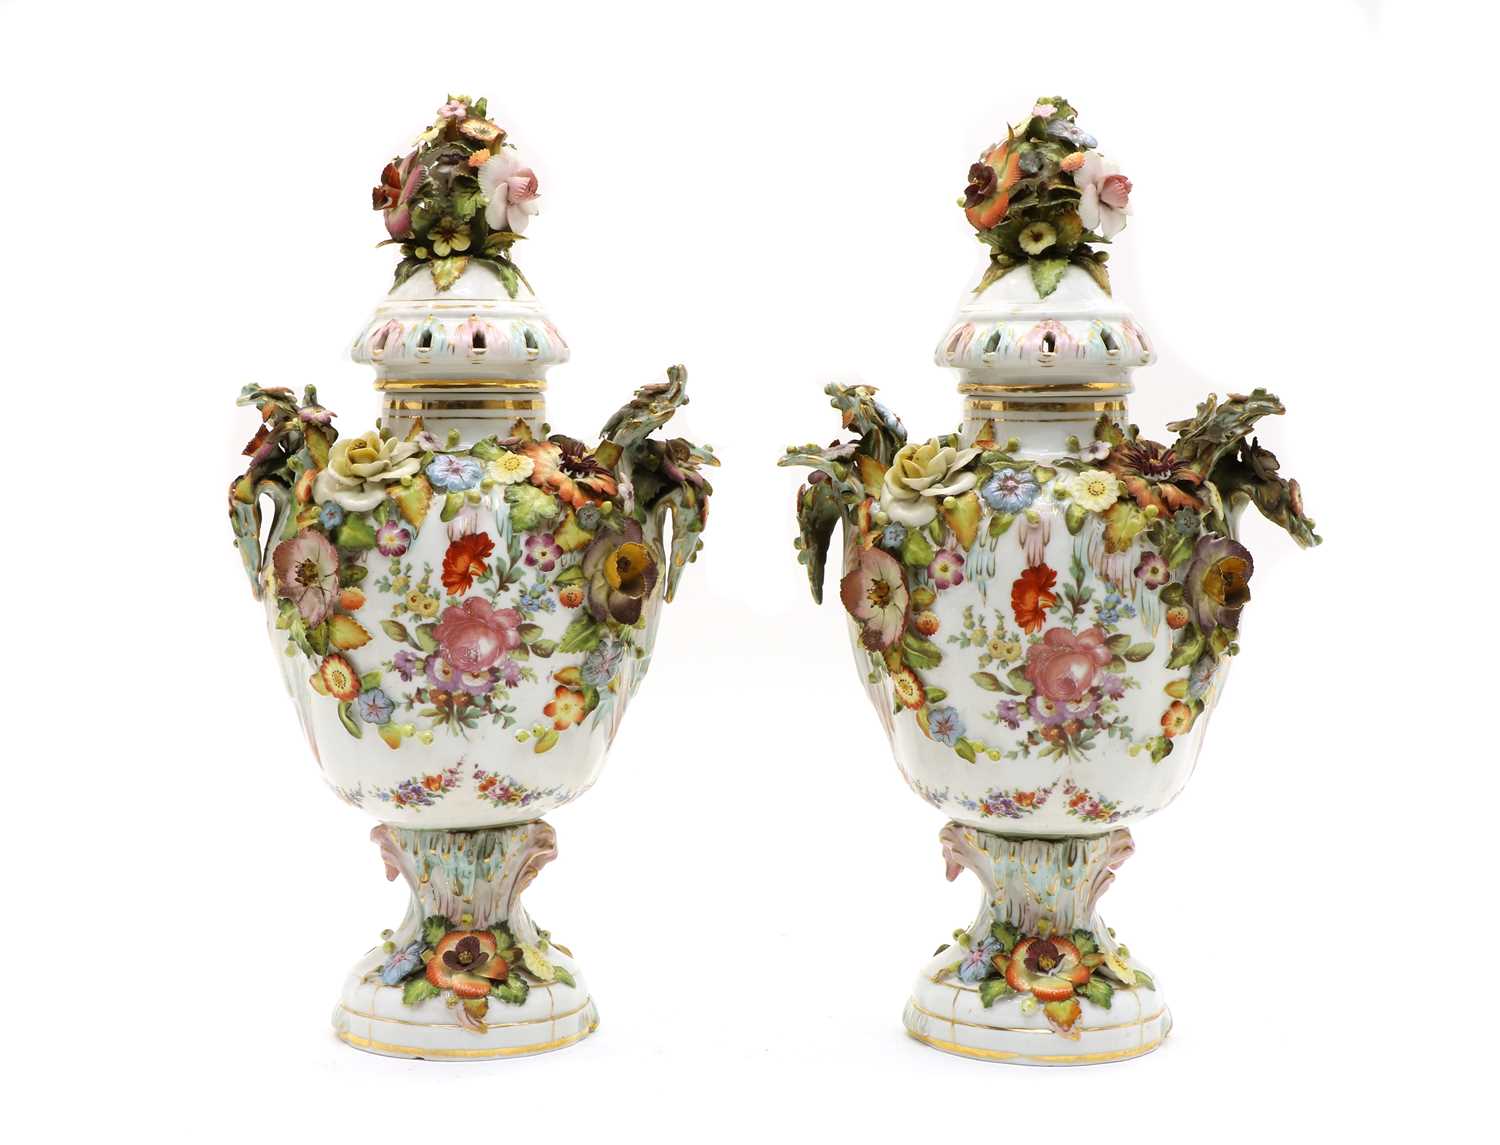 Lot 69 - A pair of Continental lidded porcelain urns